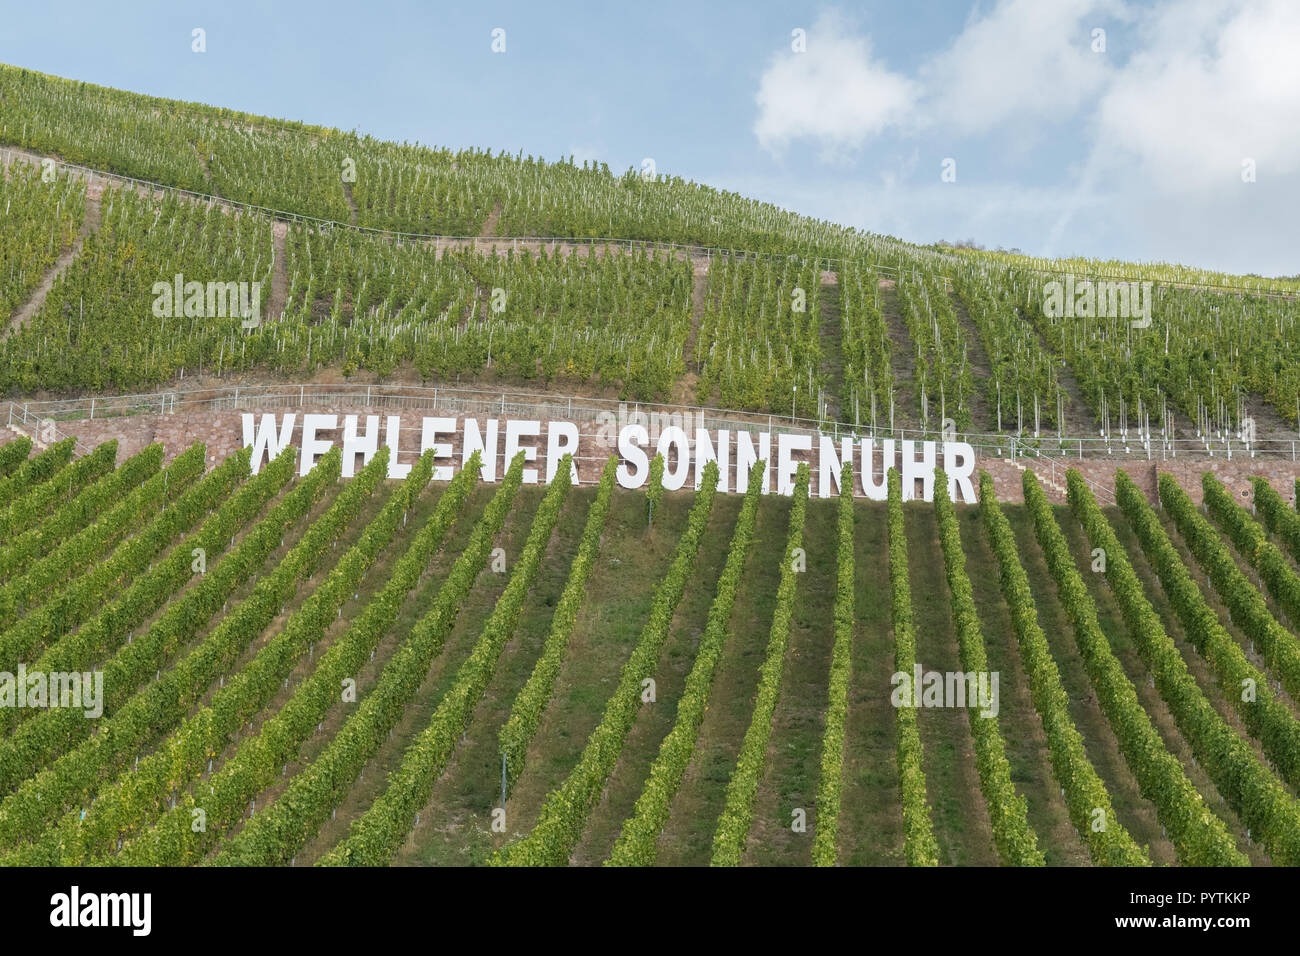 Wehlener Sonnenuhr riesling vineyard in the Moselle valley, Germany, Europe Stock Photo